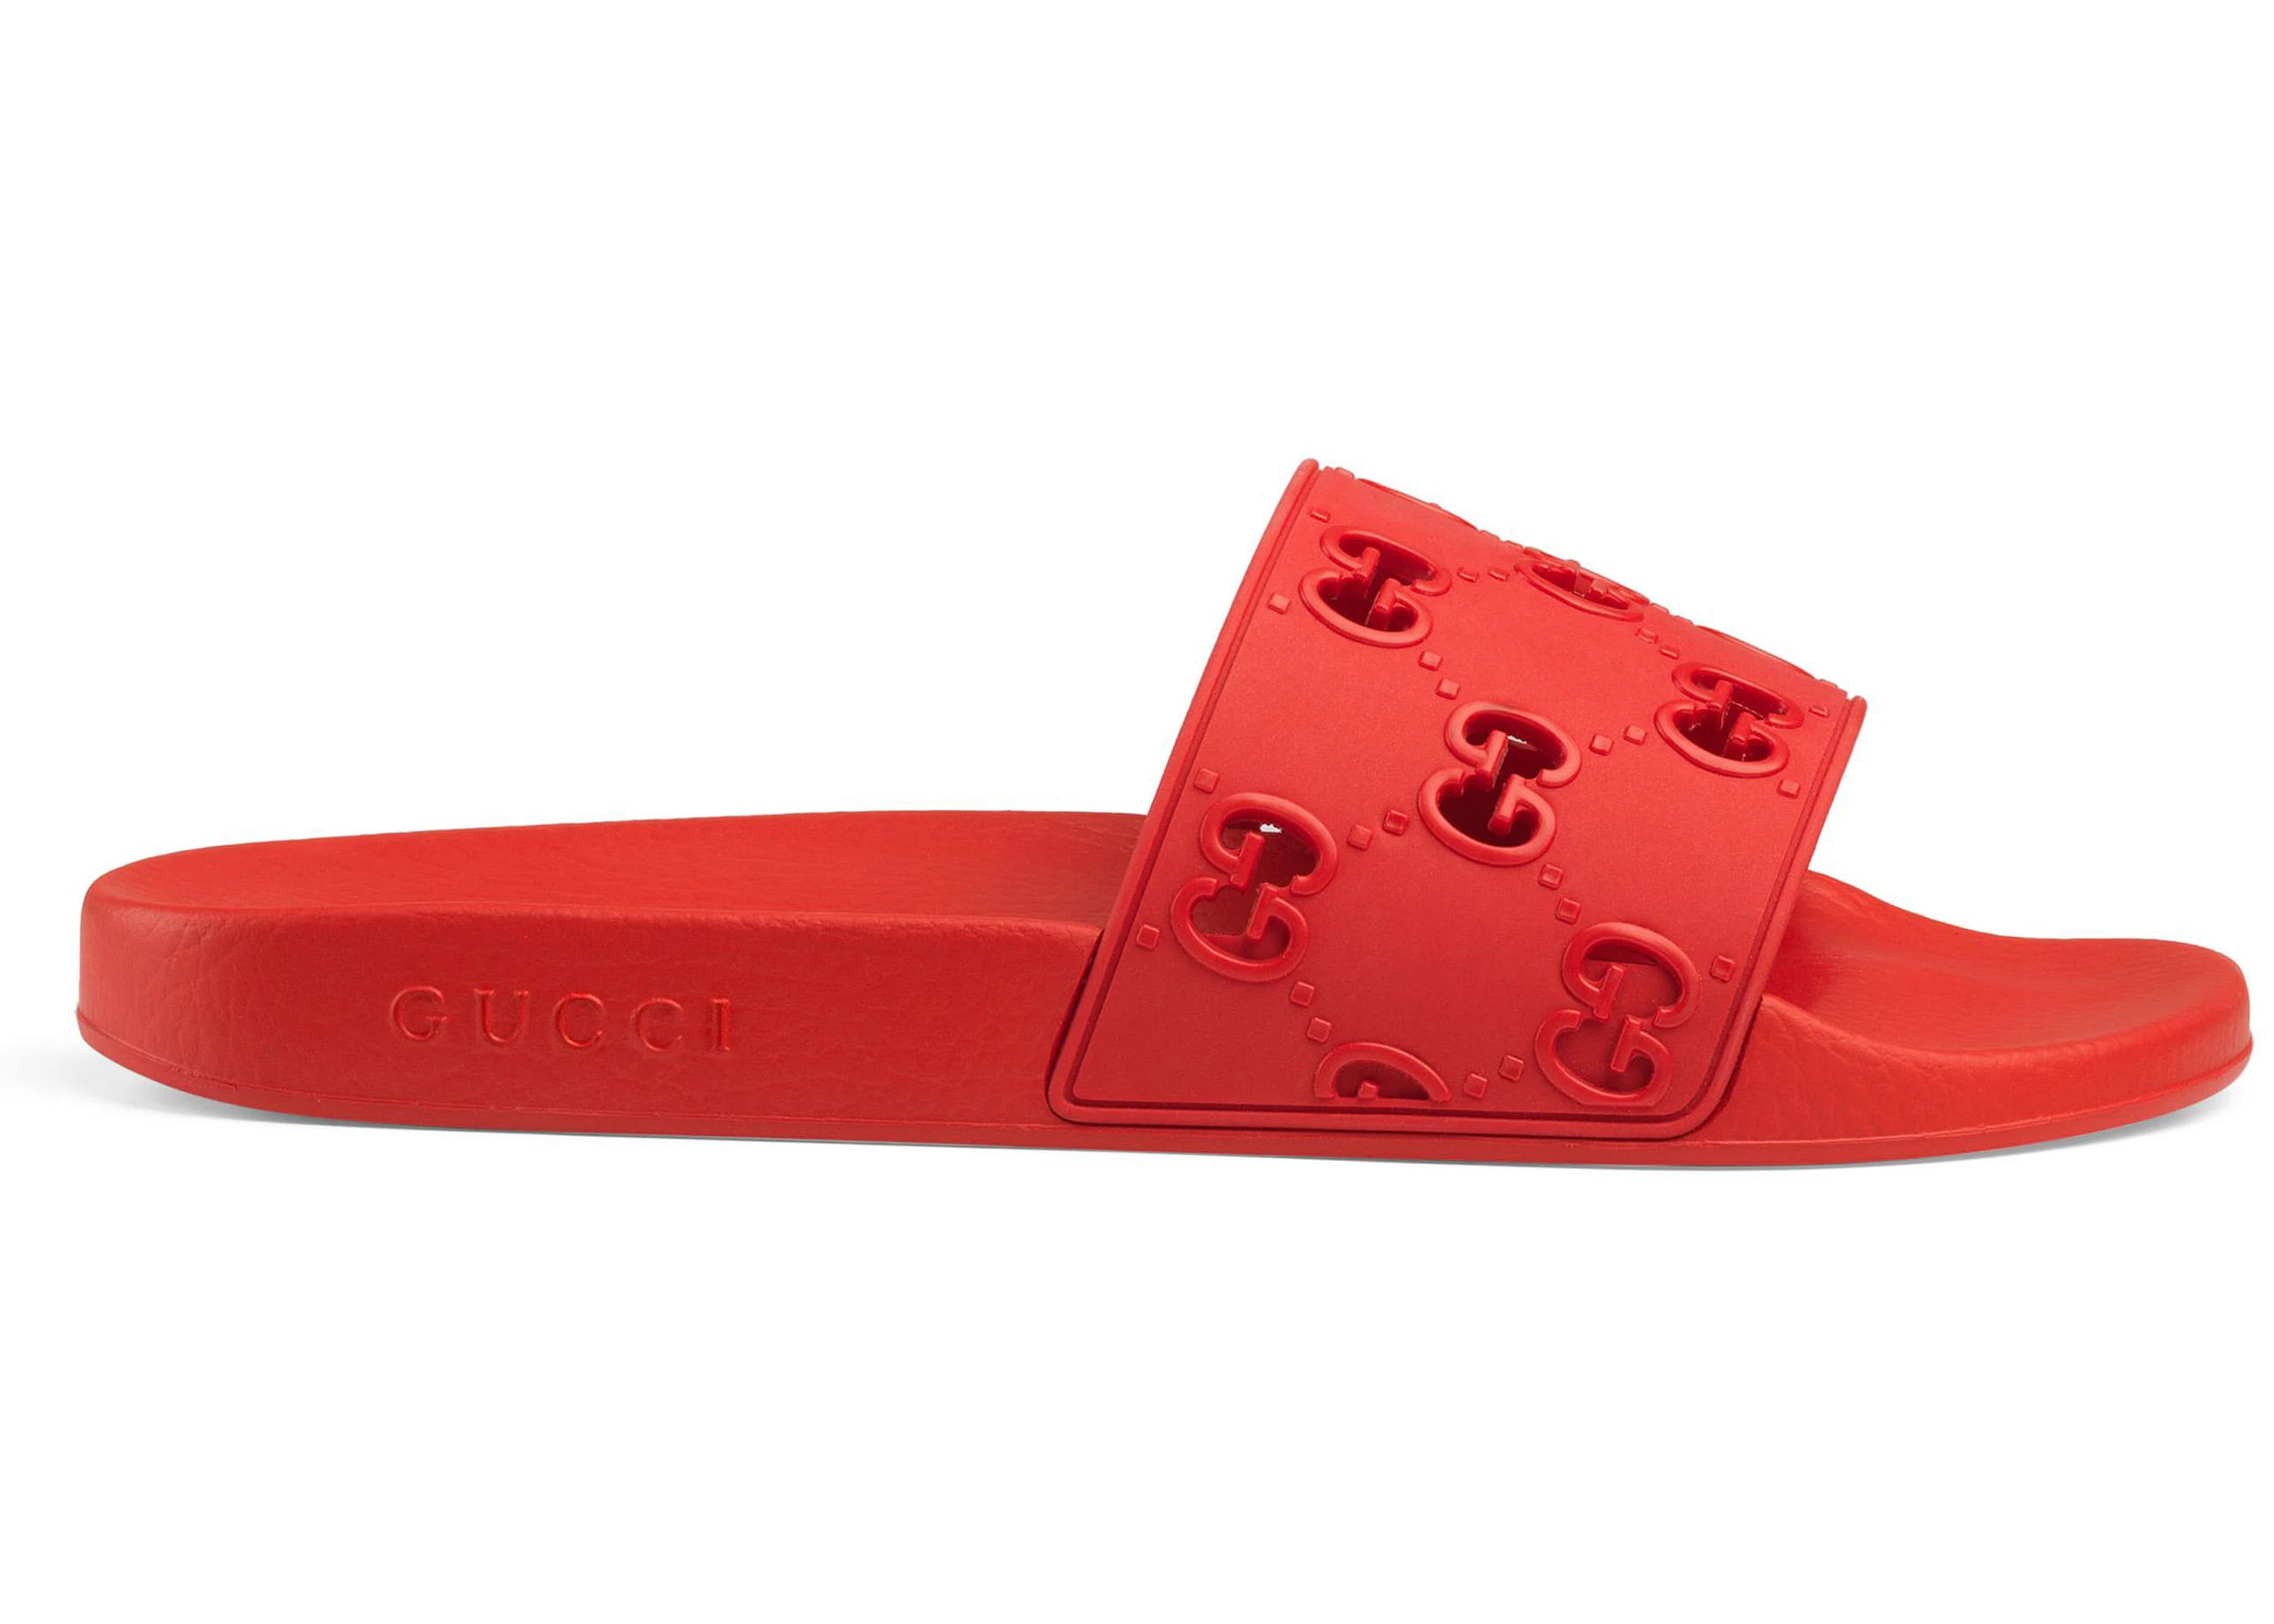 Gucci GG Slide Rubber Red - 575957 JDR00 6448 - US